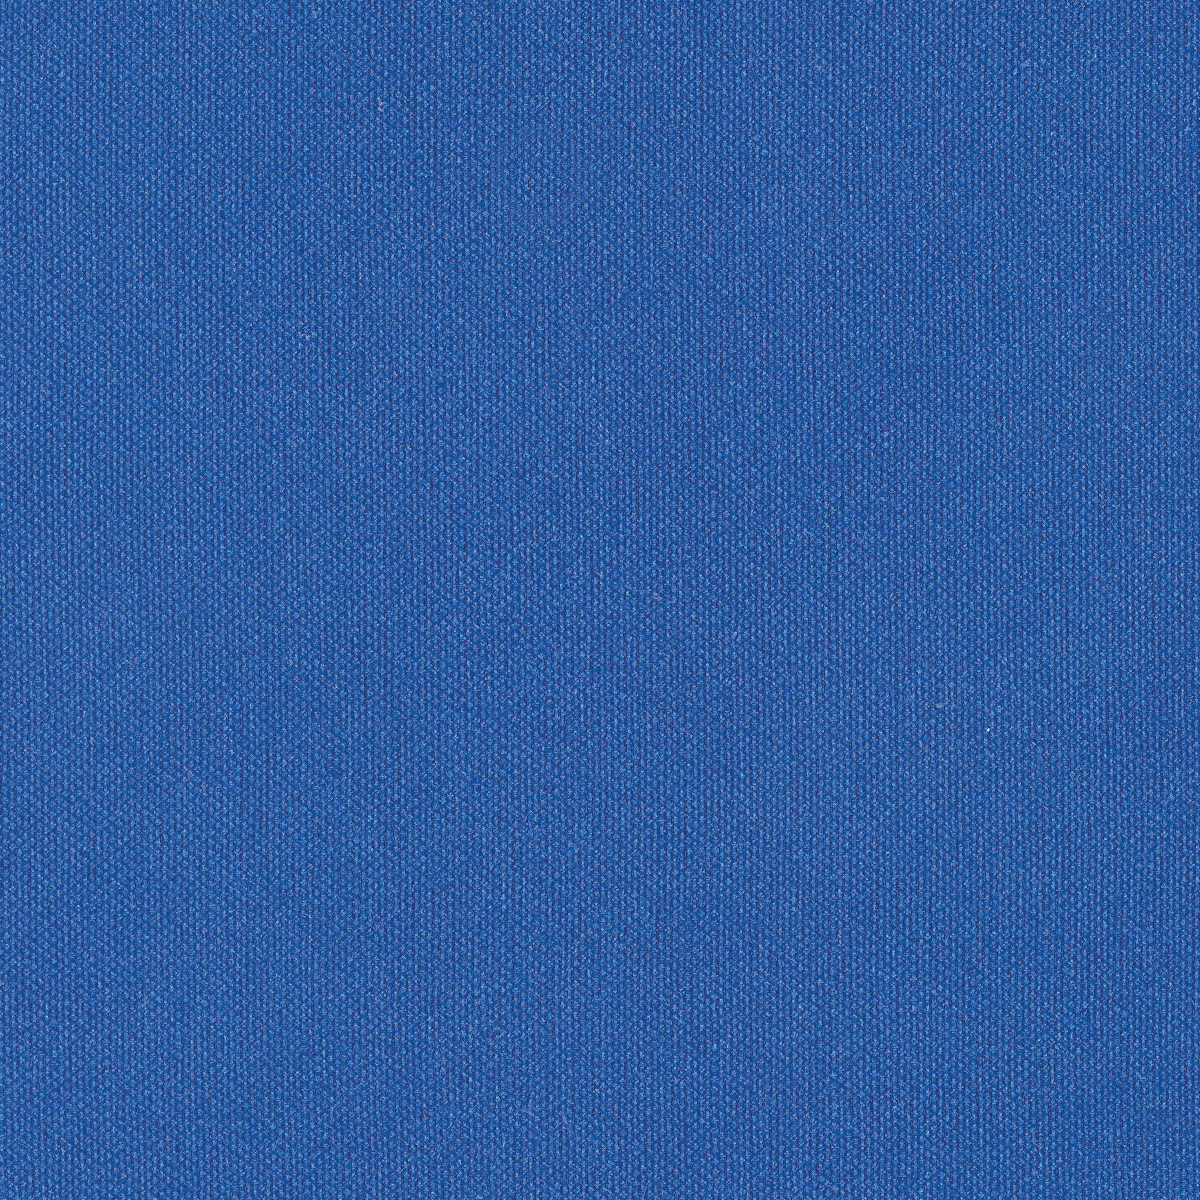 Swatch 8801 Marine Blue